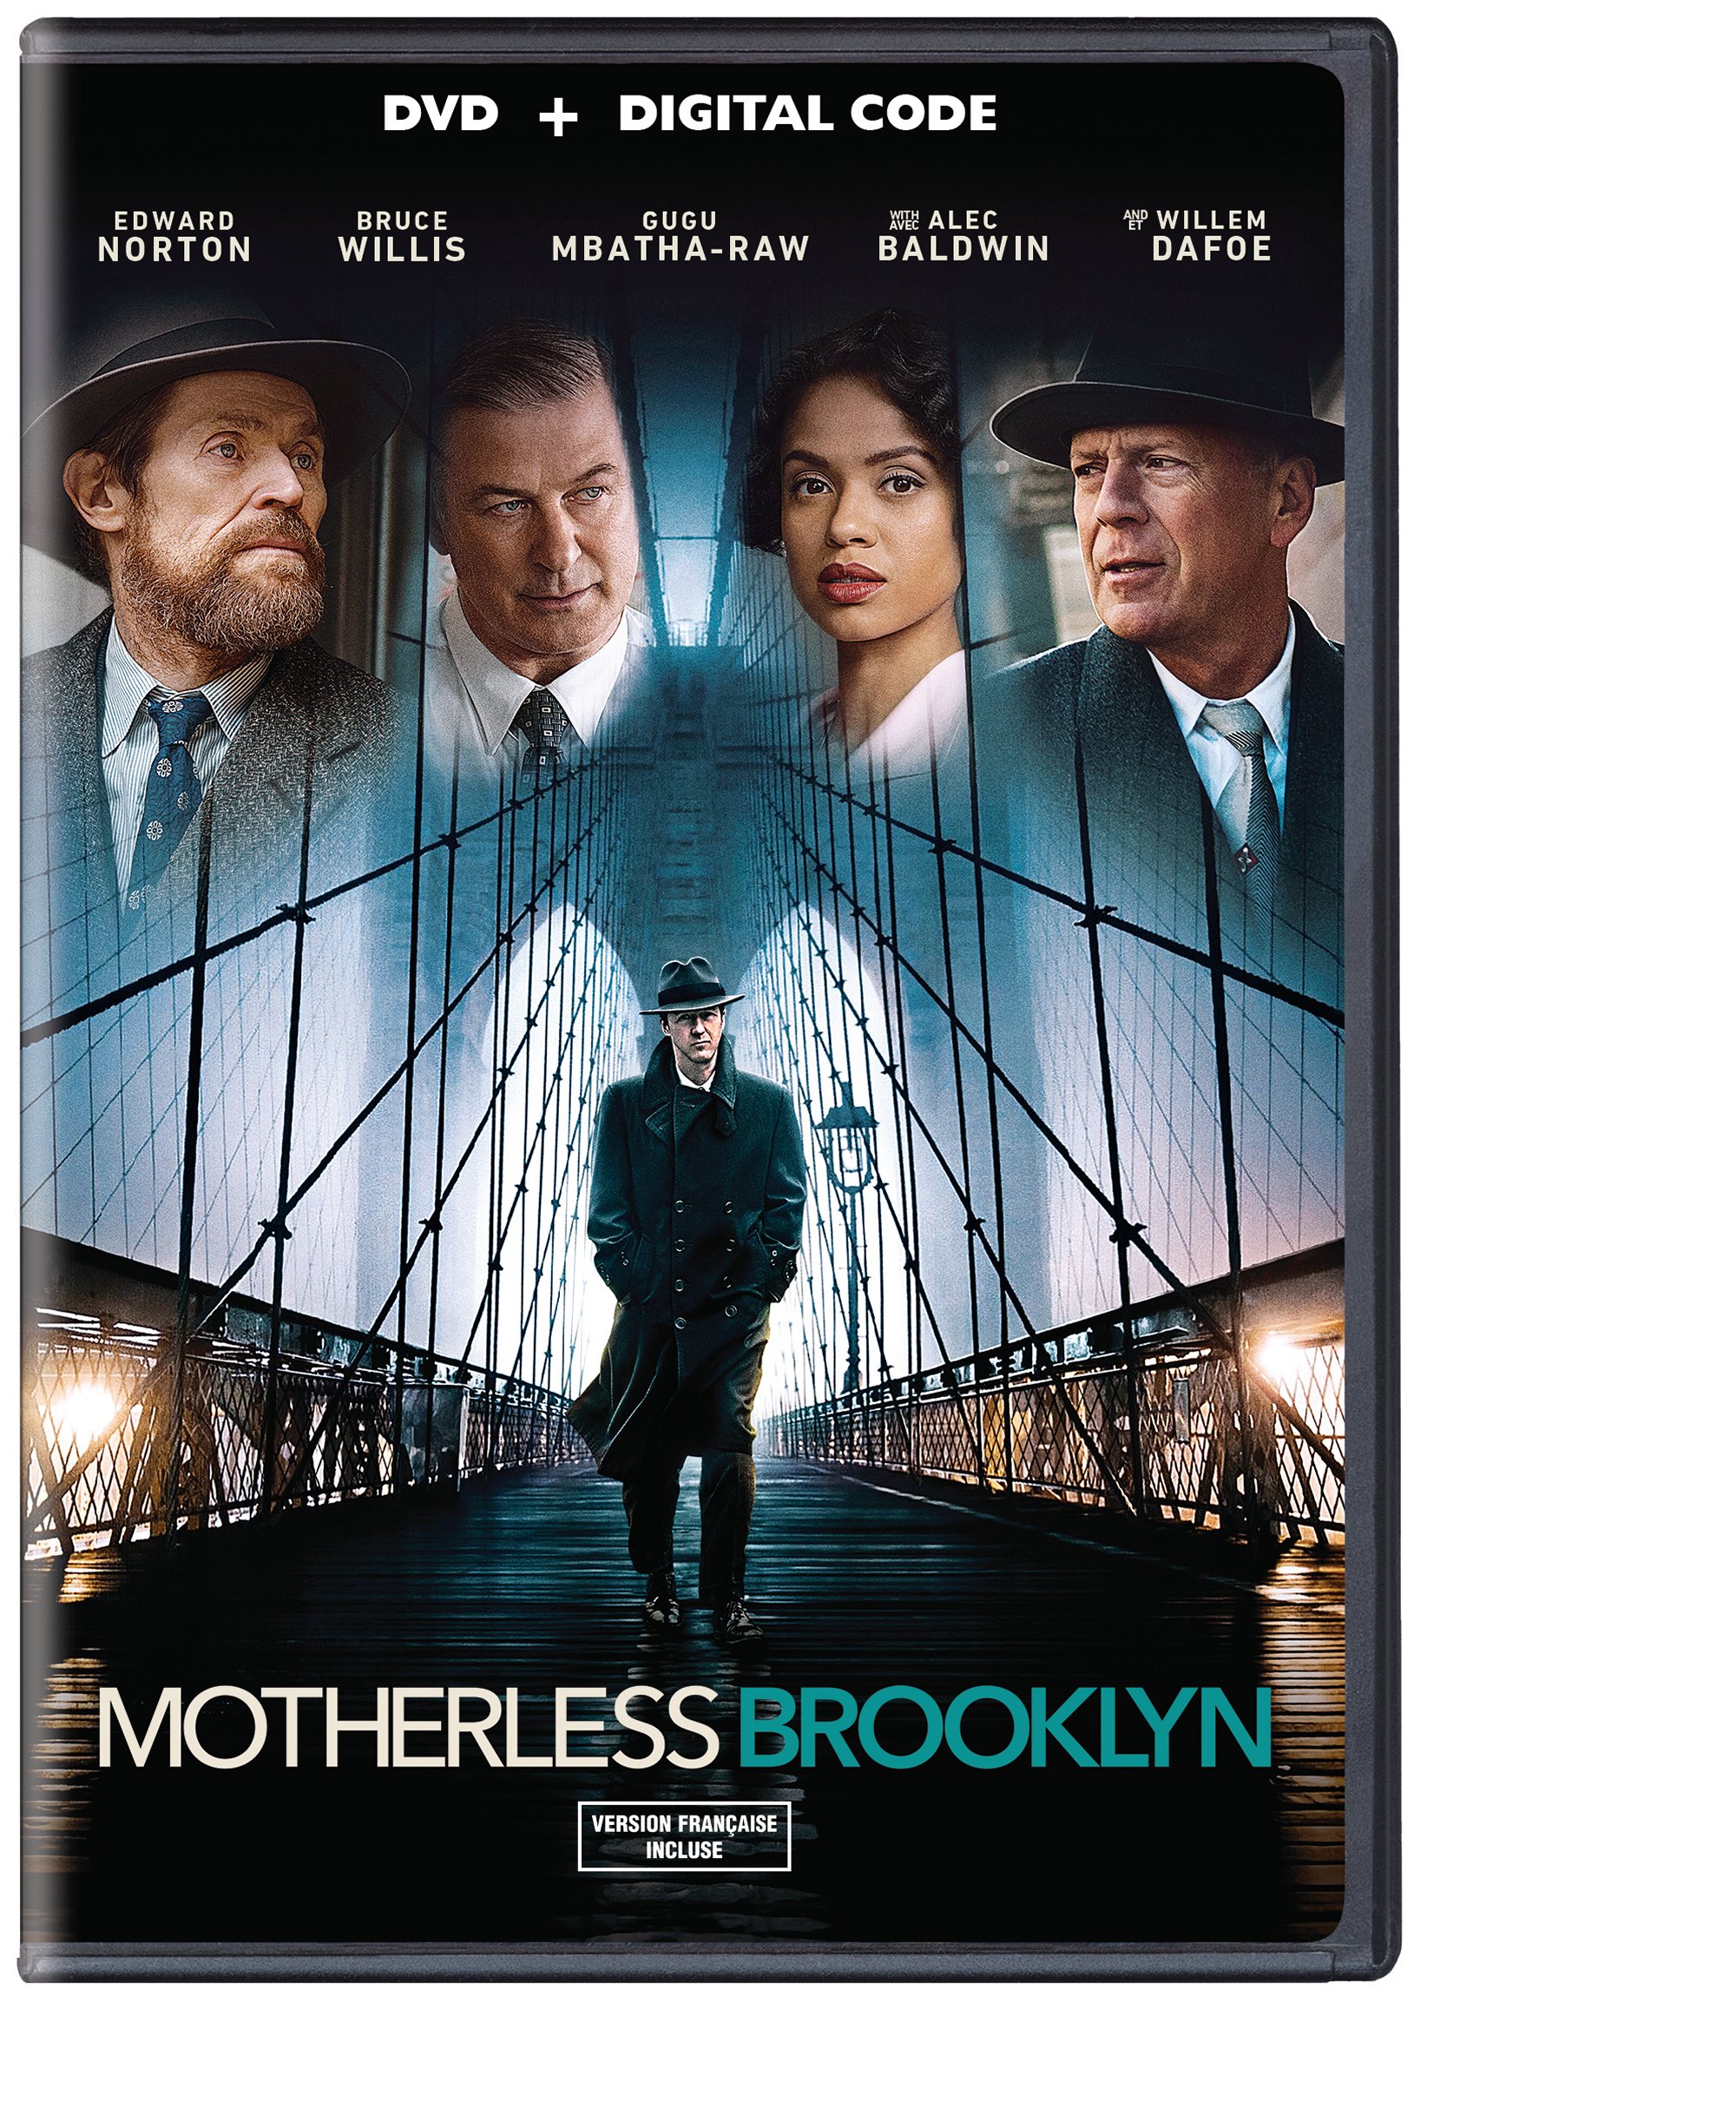 Motherless Brooklyn [DVD] (2019).  Directed by Edward Norton.